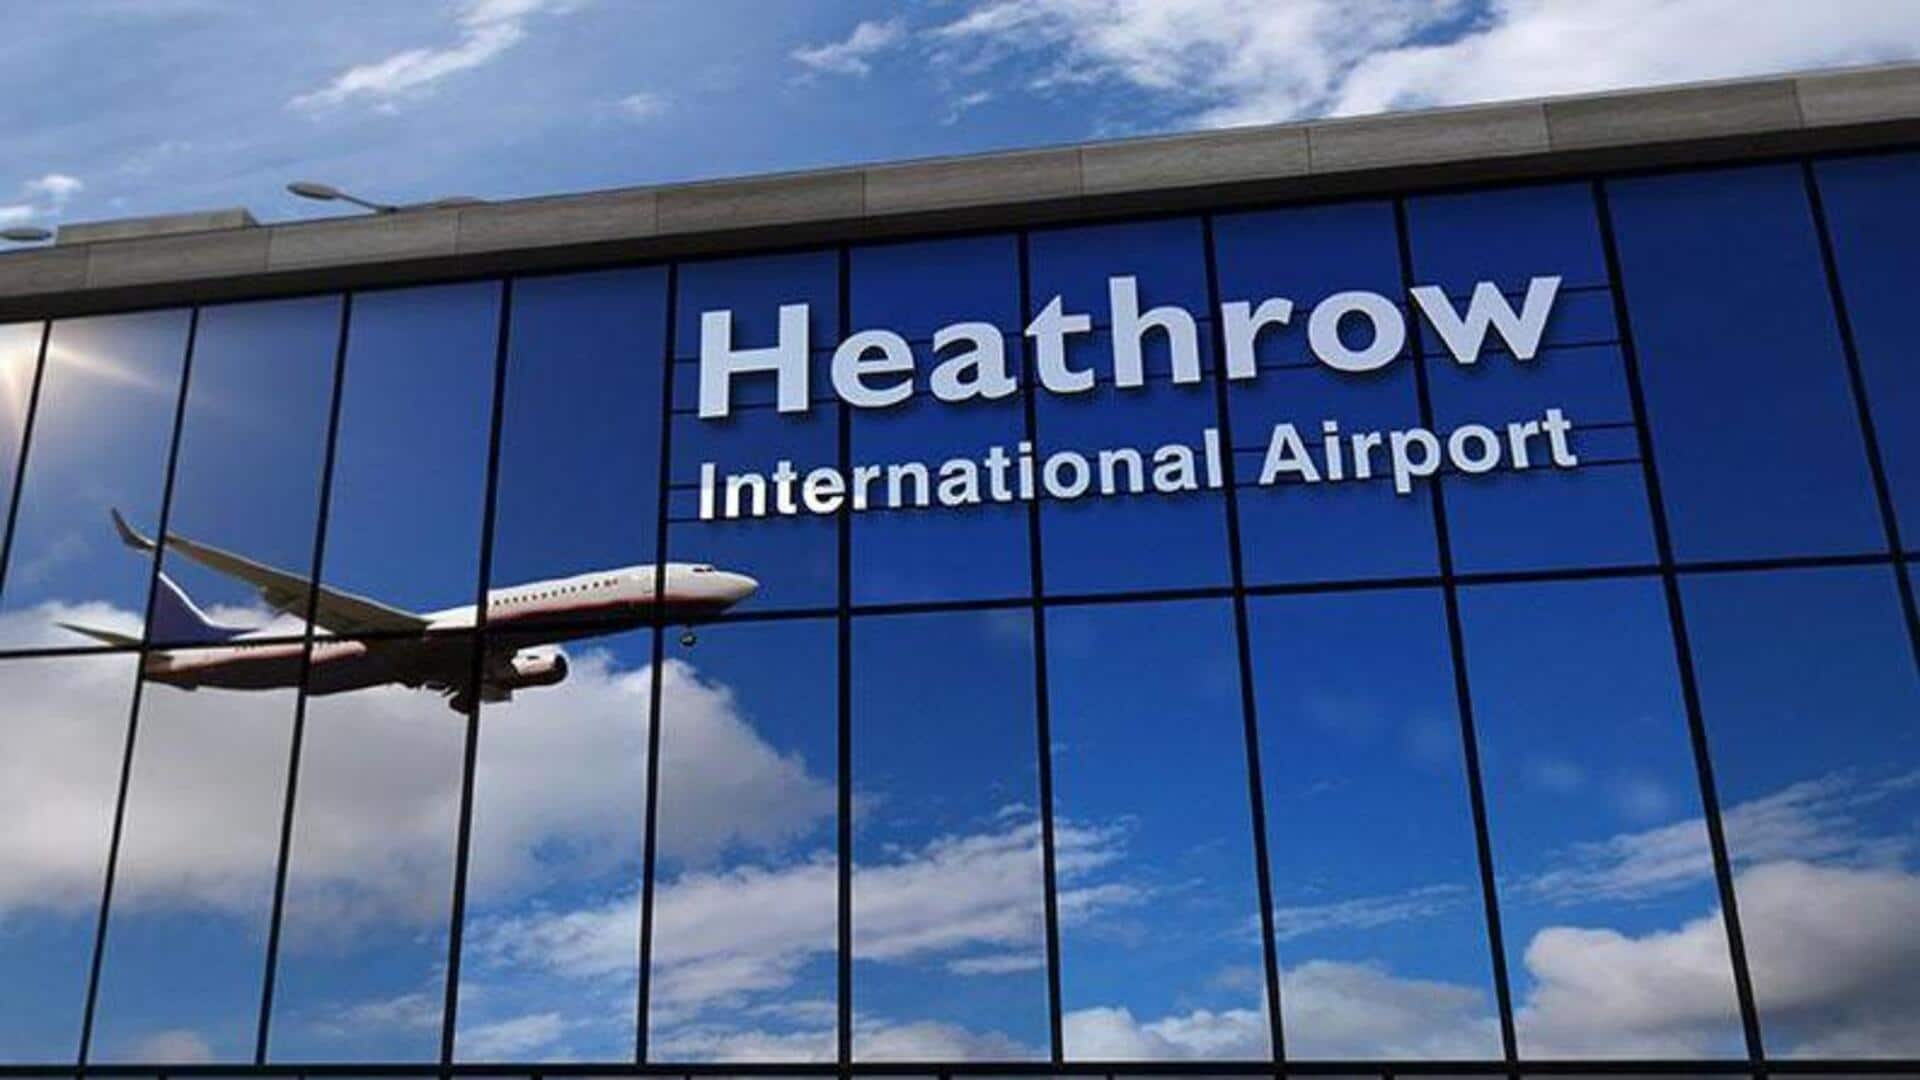 Saudi Arabia may gain majority control of London's Heathrow Airport